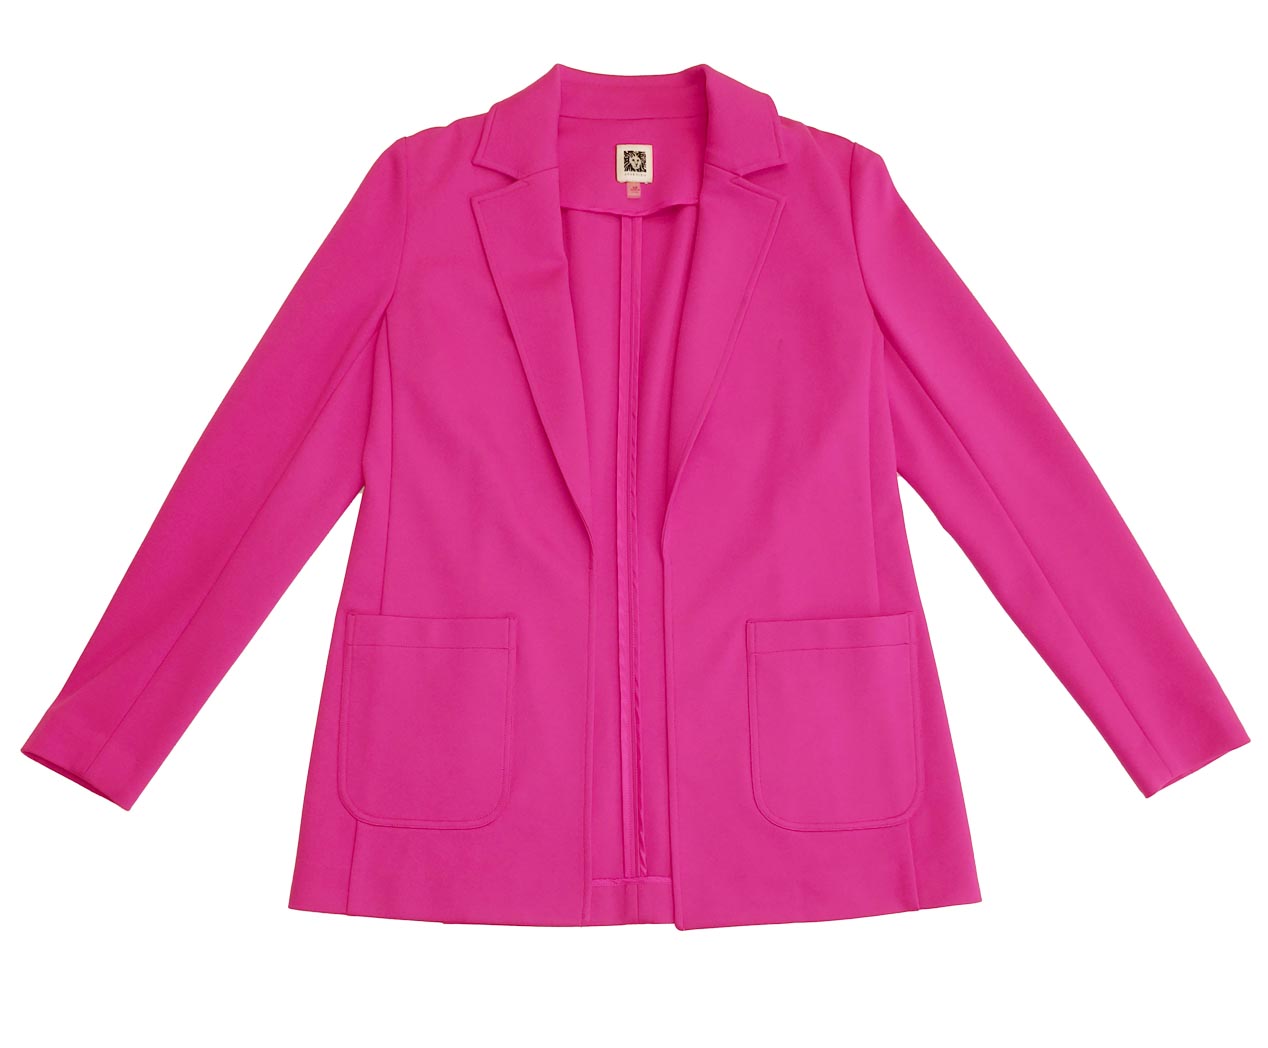 Anne Klein Full Zip Athleisure Jacket Coral Activewear Coat ~ Women's MEDIUM  - $16 - From Susan